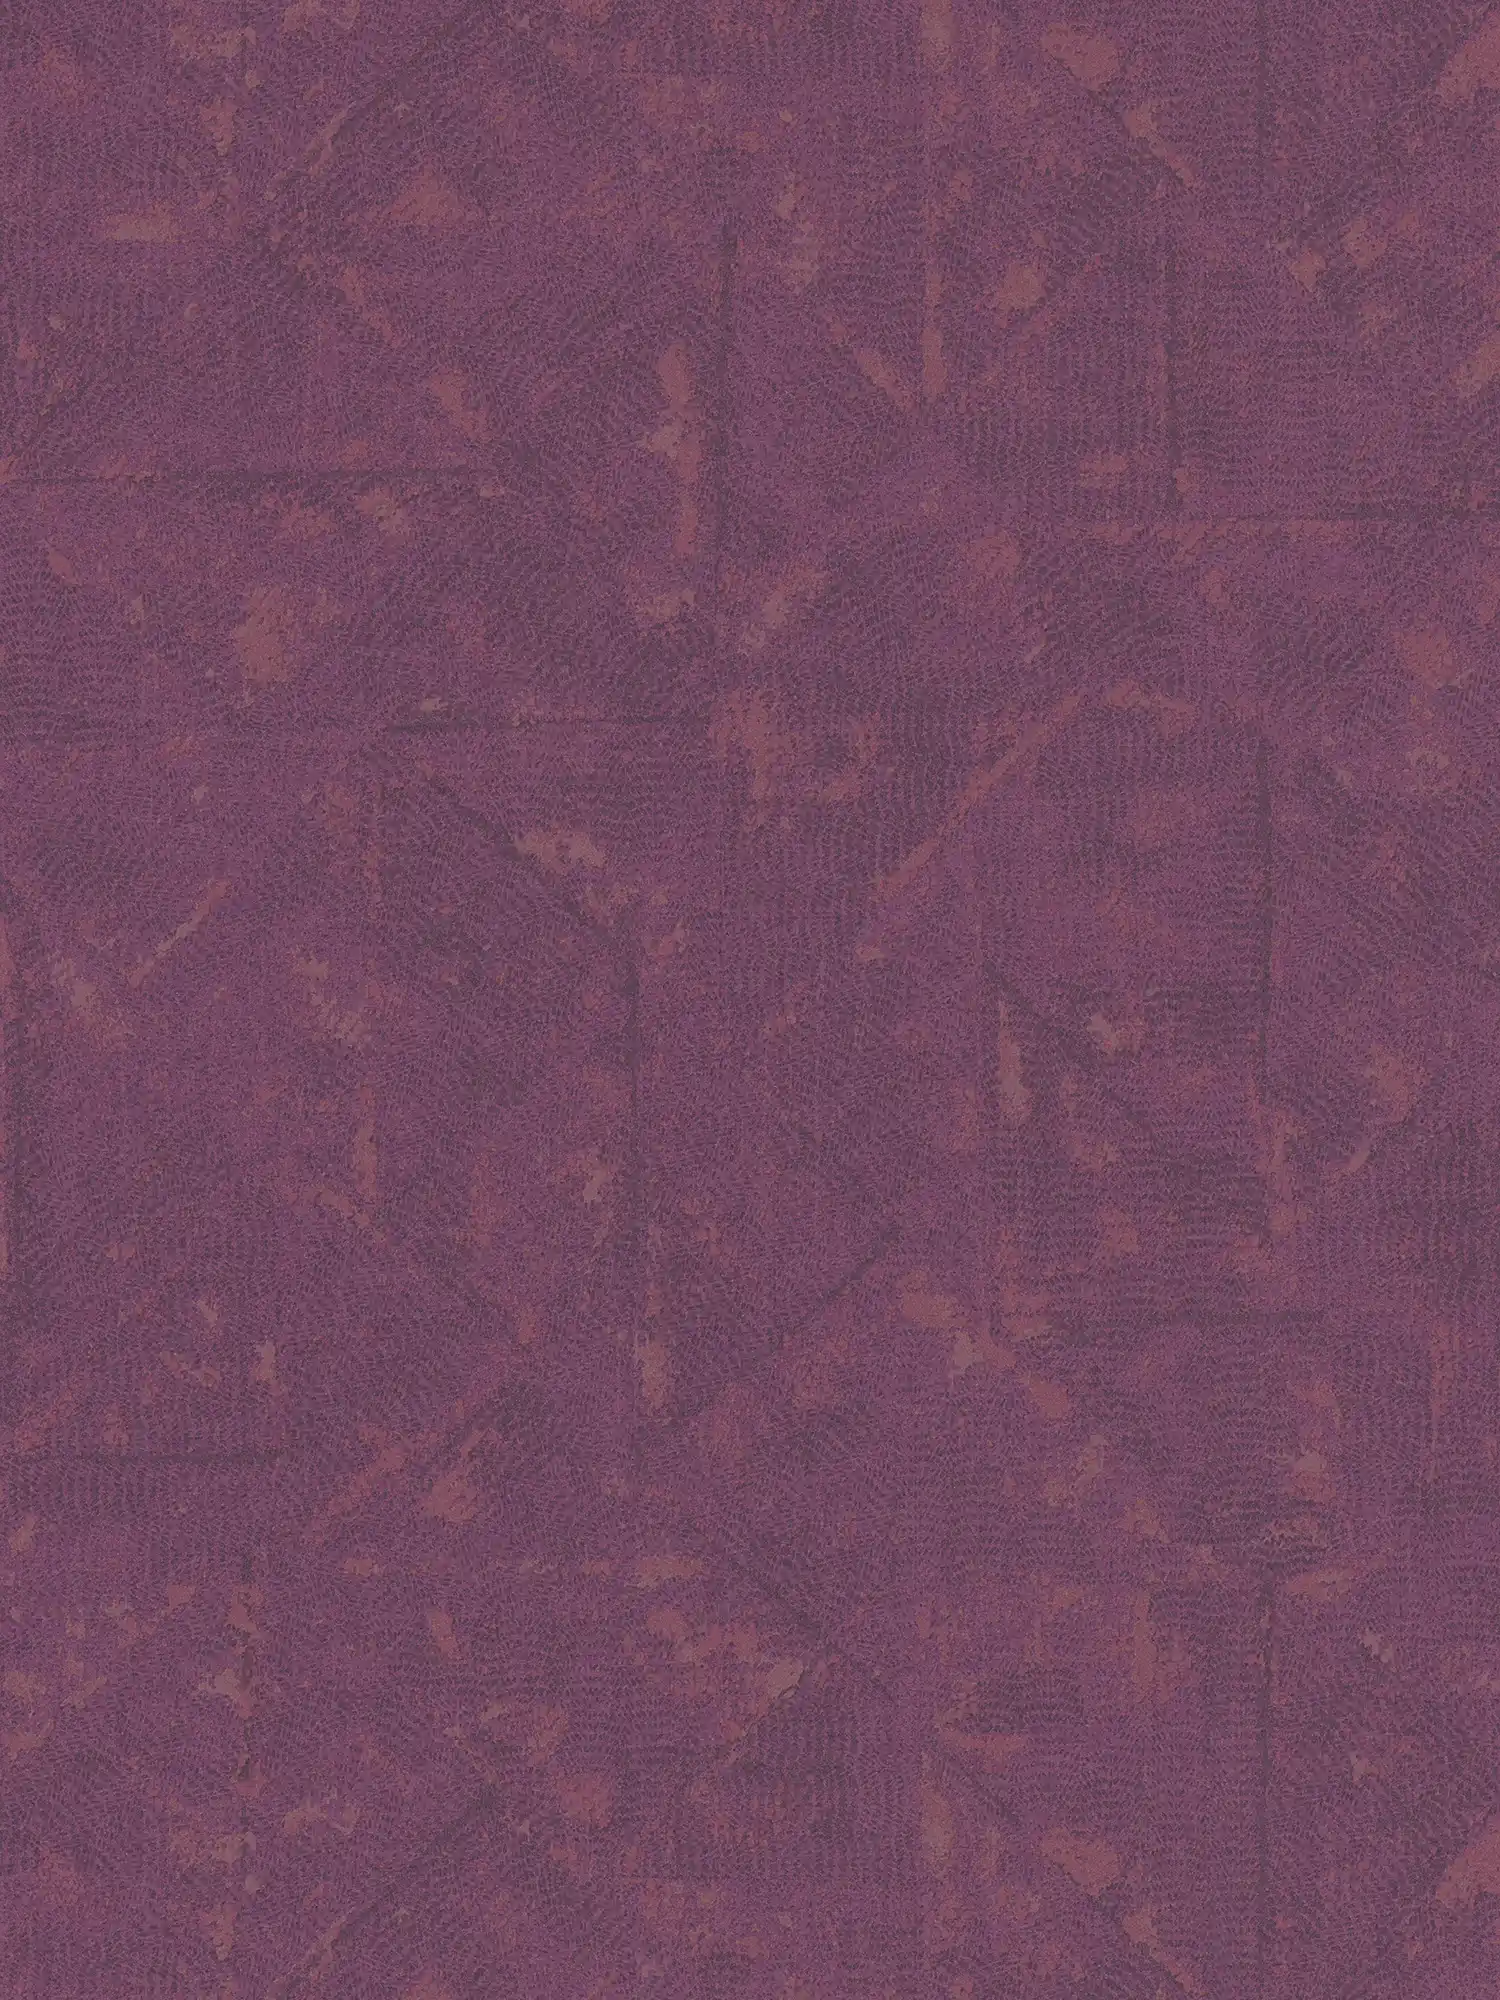 Carta da parati in tessuto non tessuto magenta con motivo asimmetrico - viola
